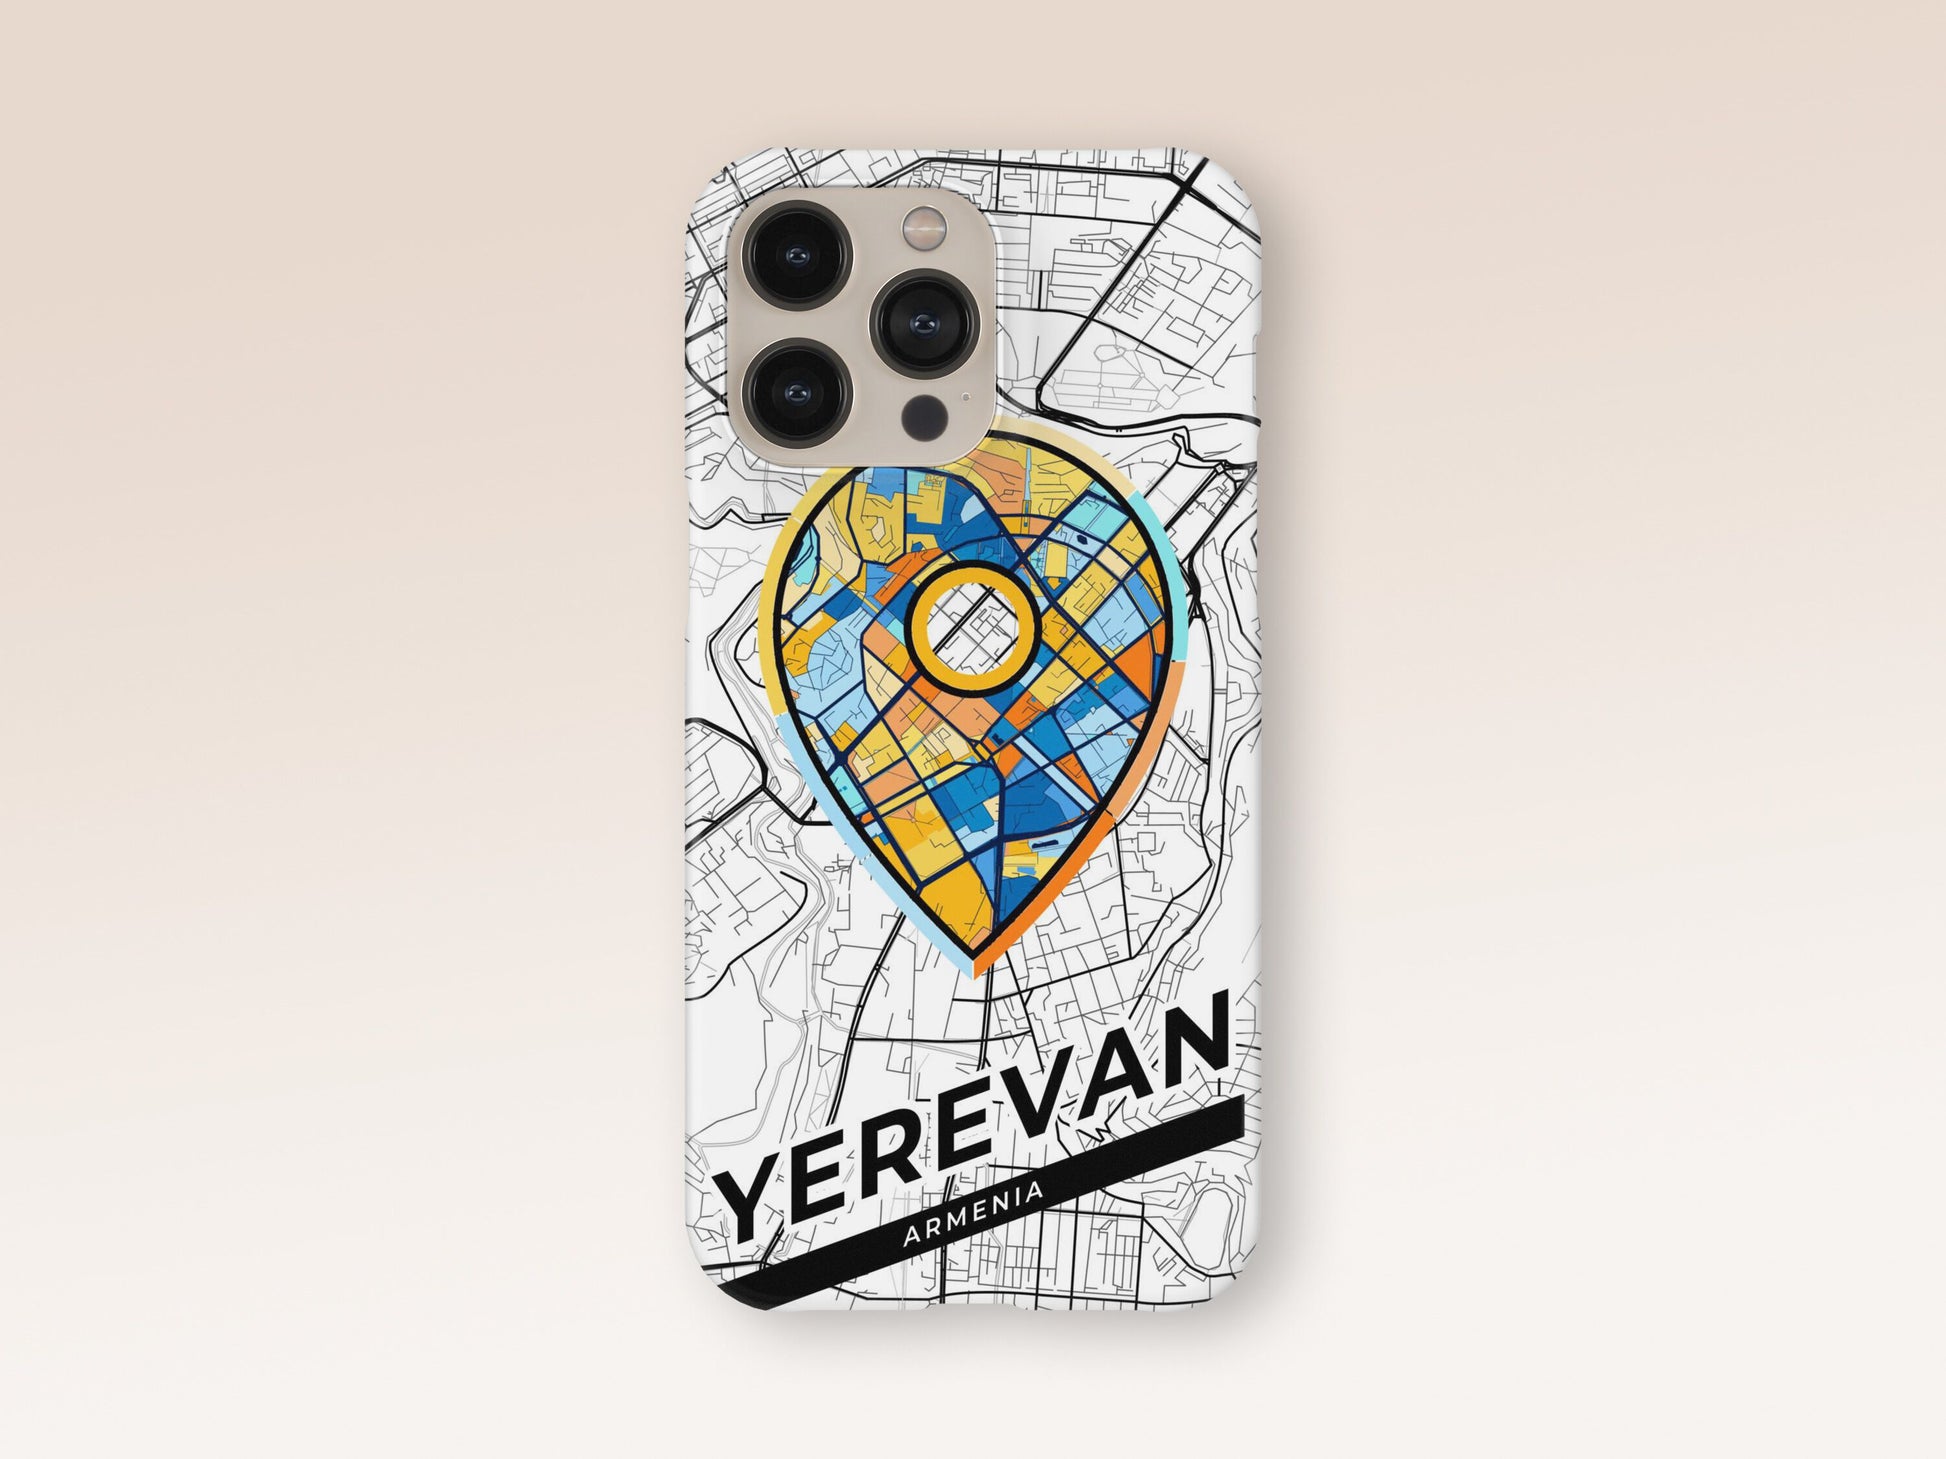 Yerevan Armenia slim phone case with colorful icon 1